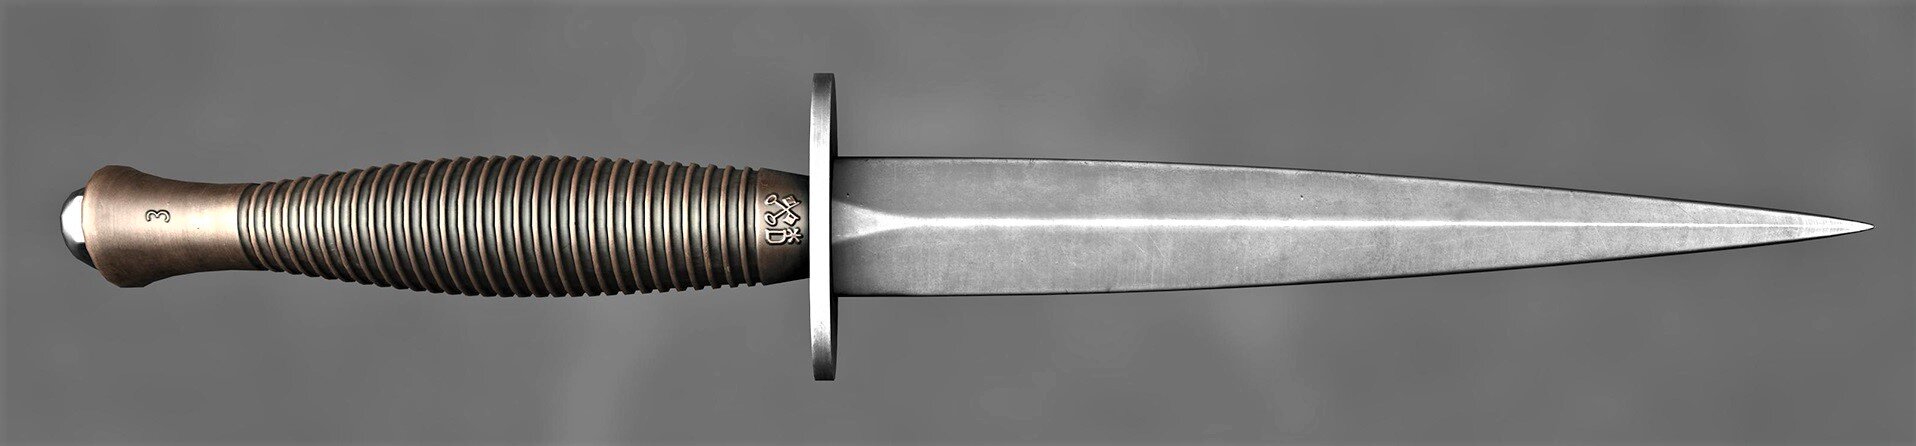 The KA-BAR KNIFE by Tyr Neilsen — ACADEMY of VIKING MARTIAL ARTS